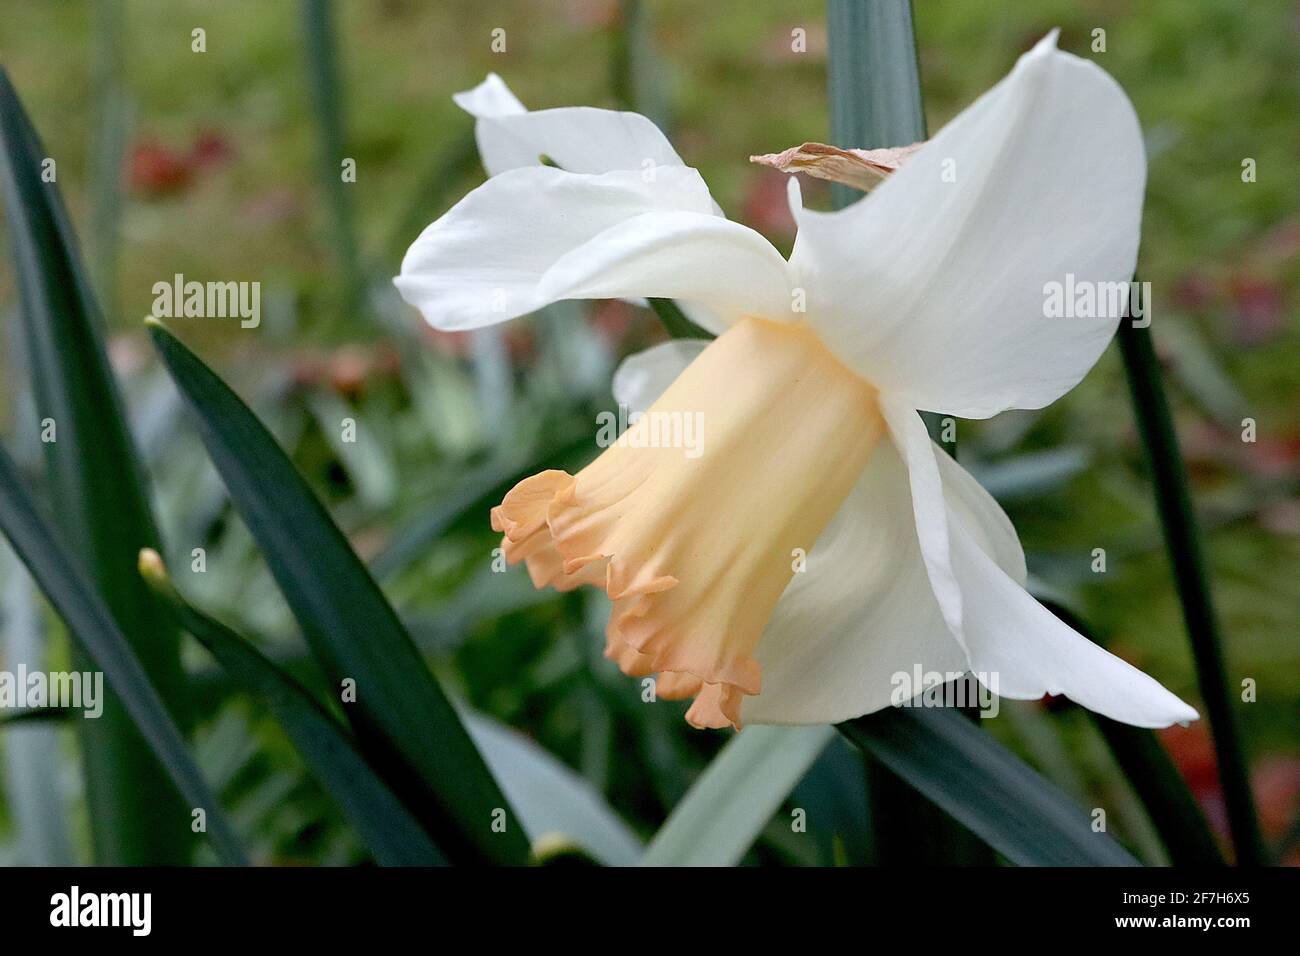 Narcissus / Daffodil ‘Pink Silk’ Division 1 Trompete Daffodils weiße Blütenblätter und zarte aprikosenrosa Trompete, April, England, UK Stockfoto